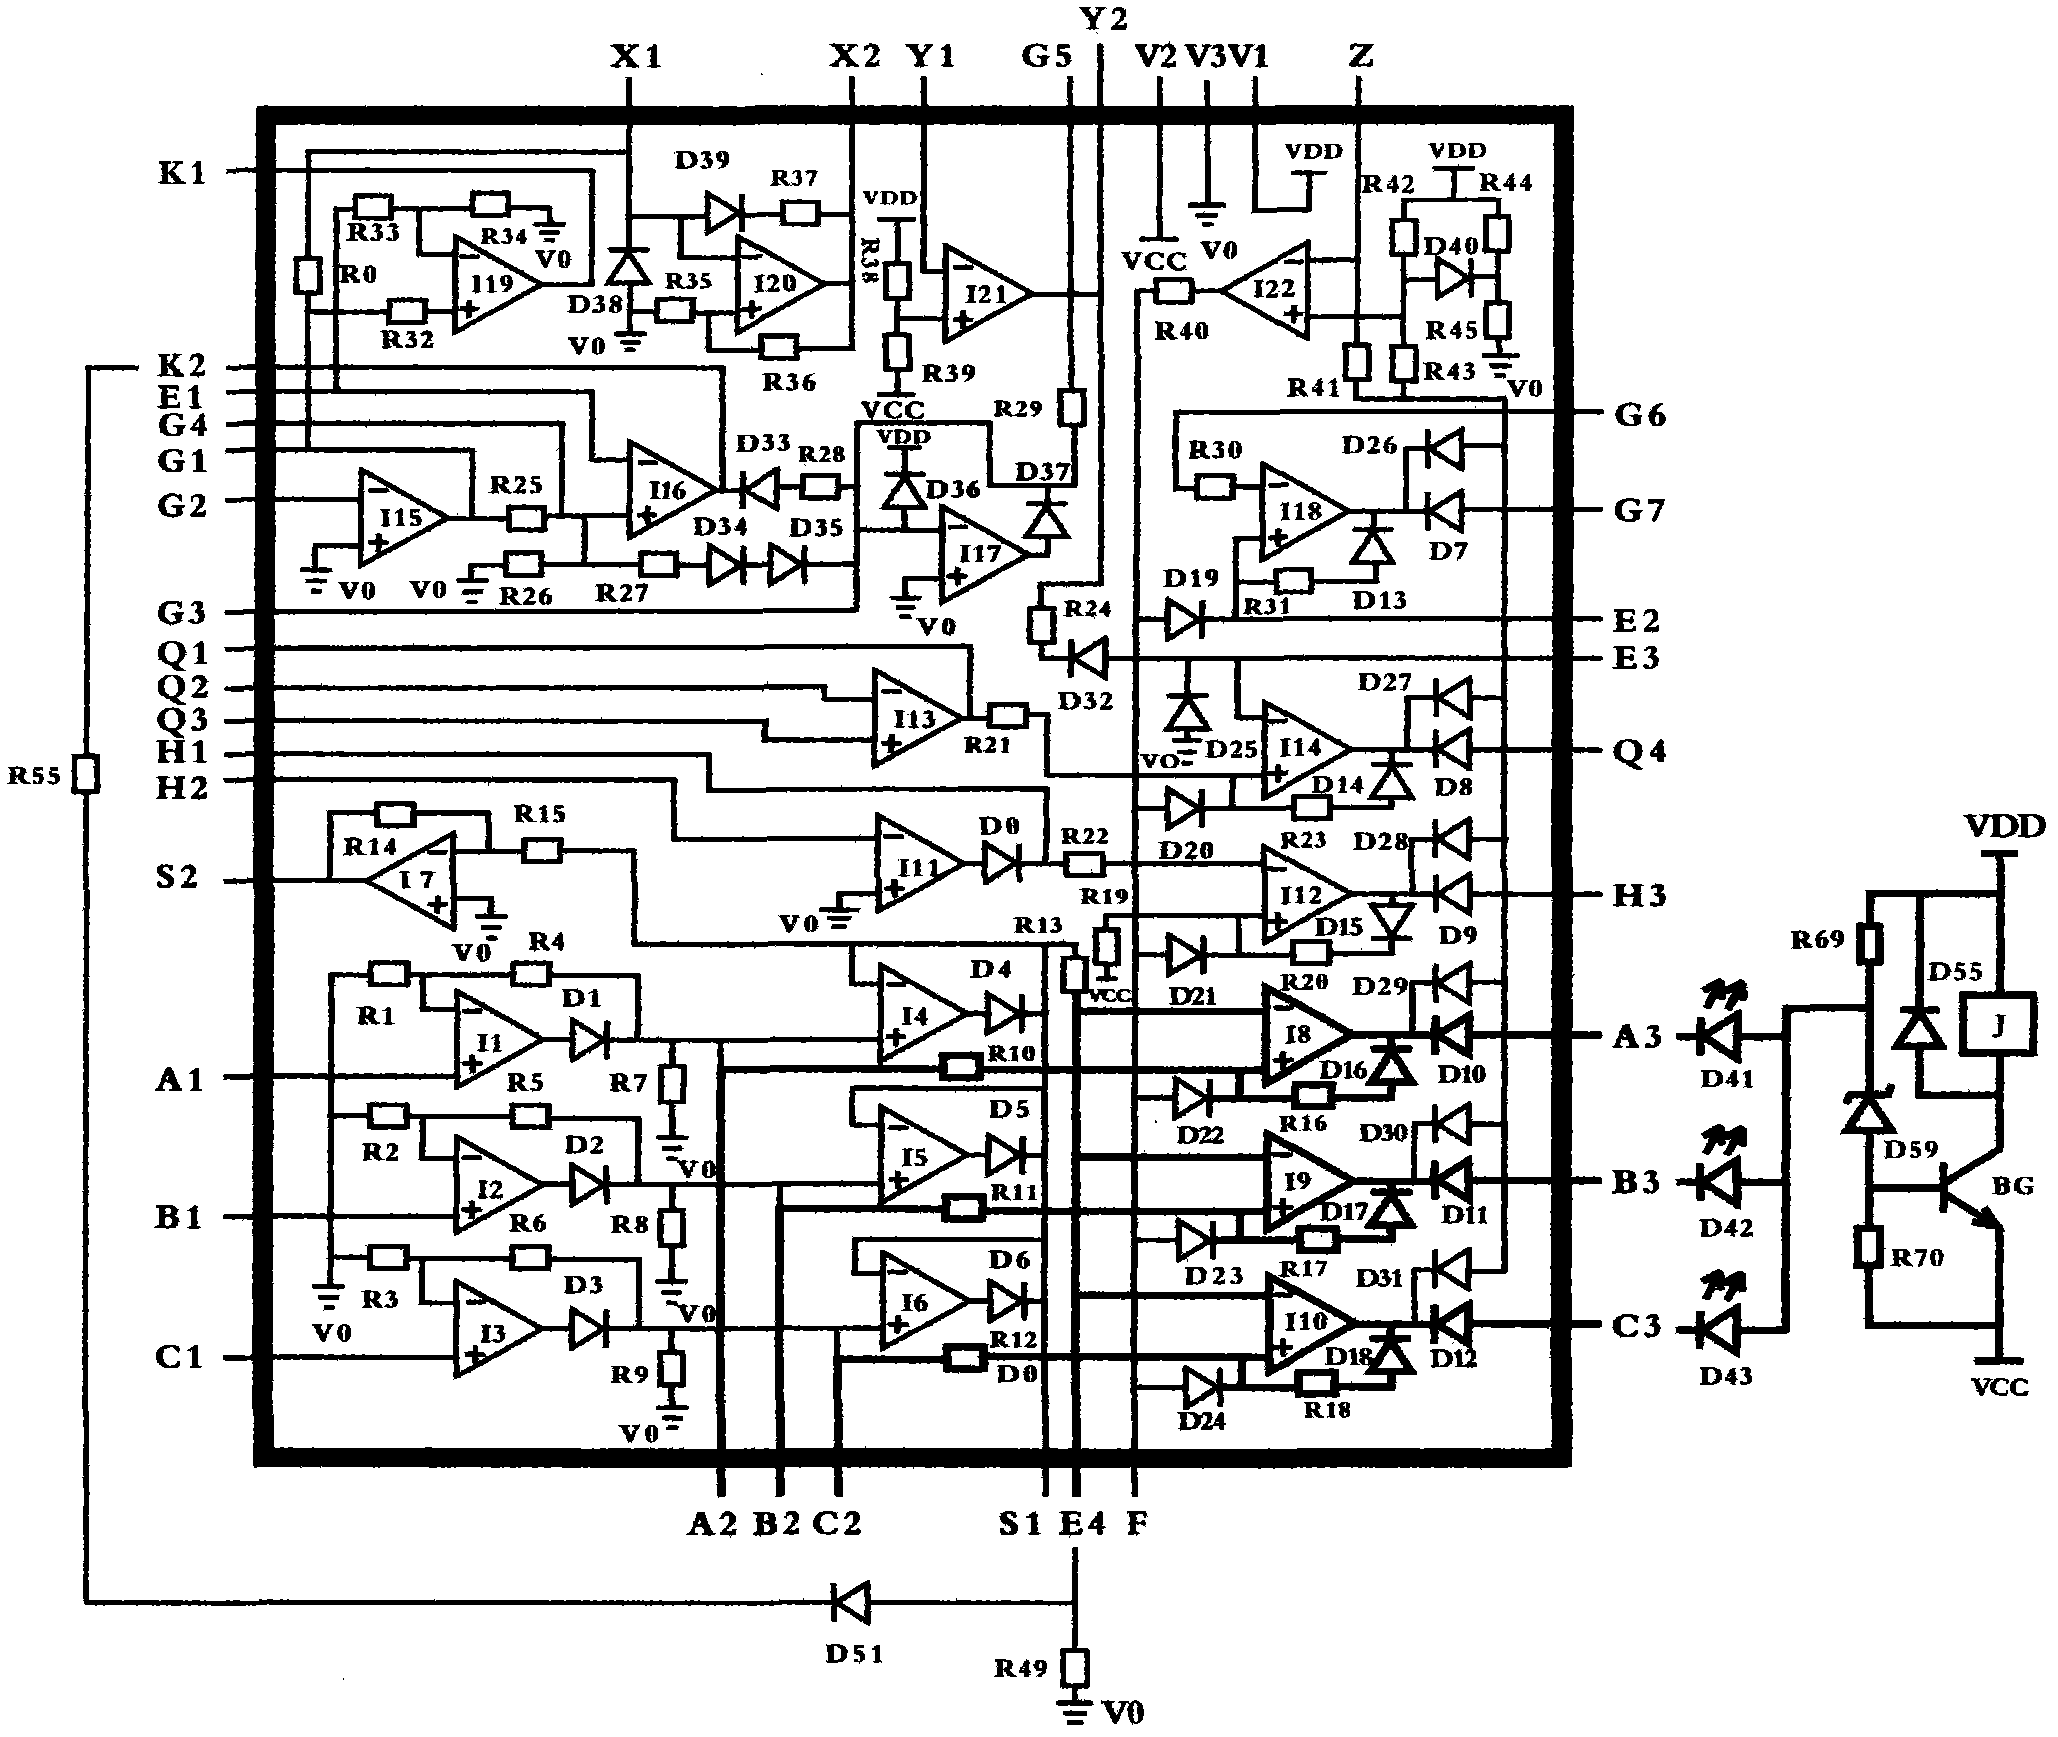 Universal protector analog integrated circuit